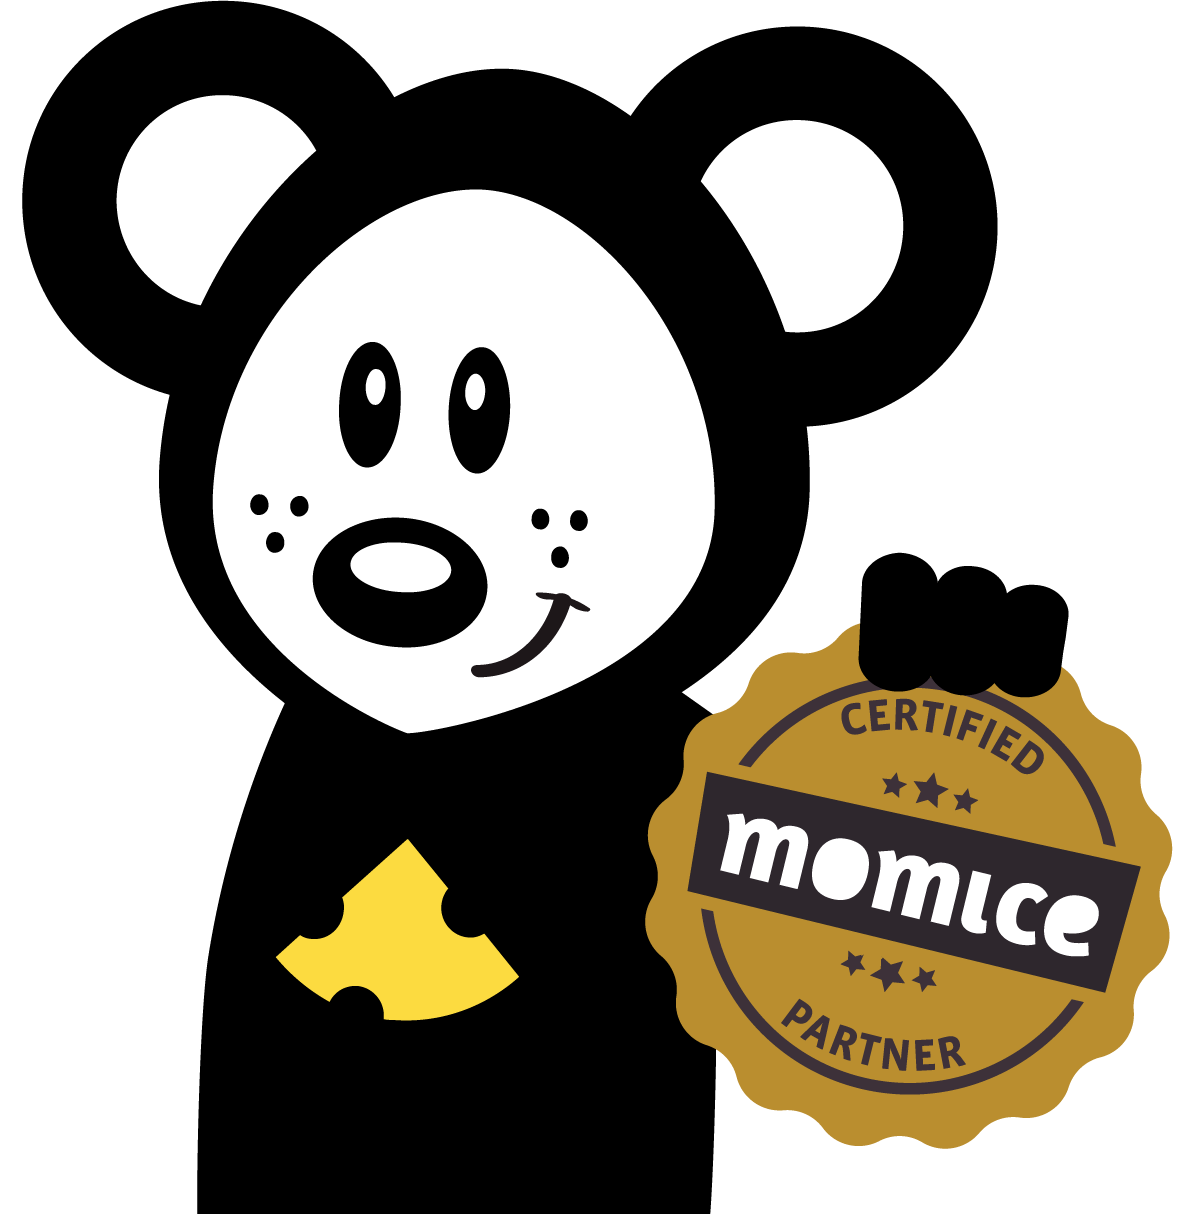 Certified_Partner_Momice_Mo_Logo